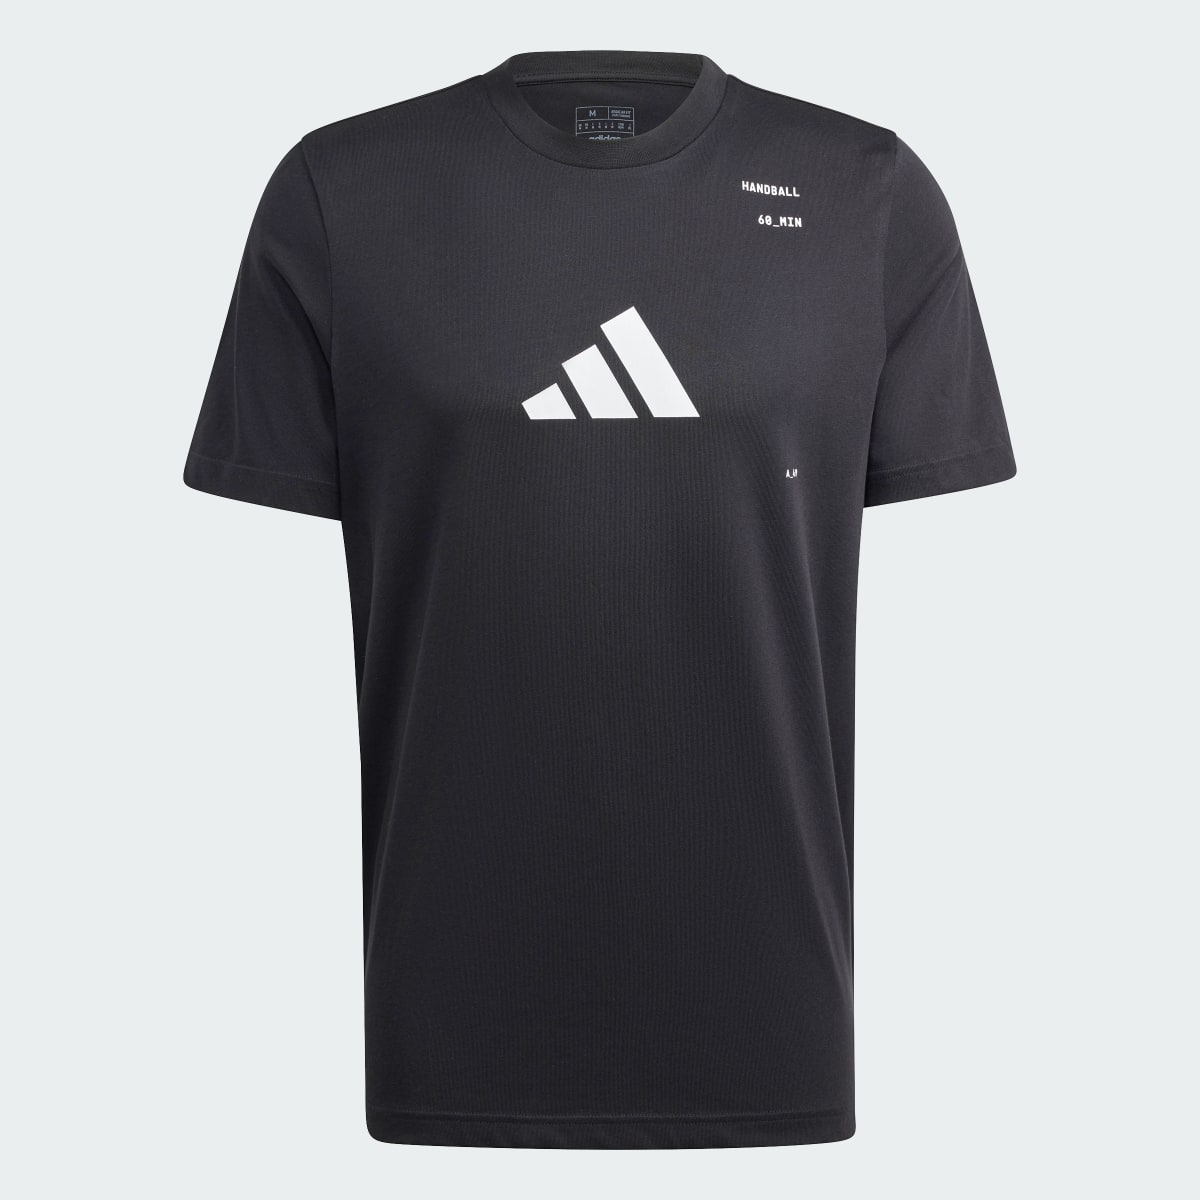 Adidas Handball Category Graphic T-Shirt. 5